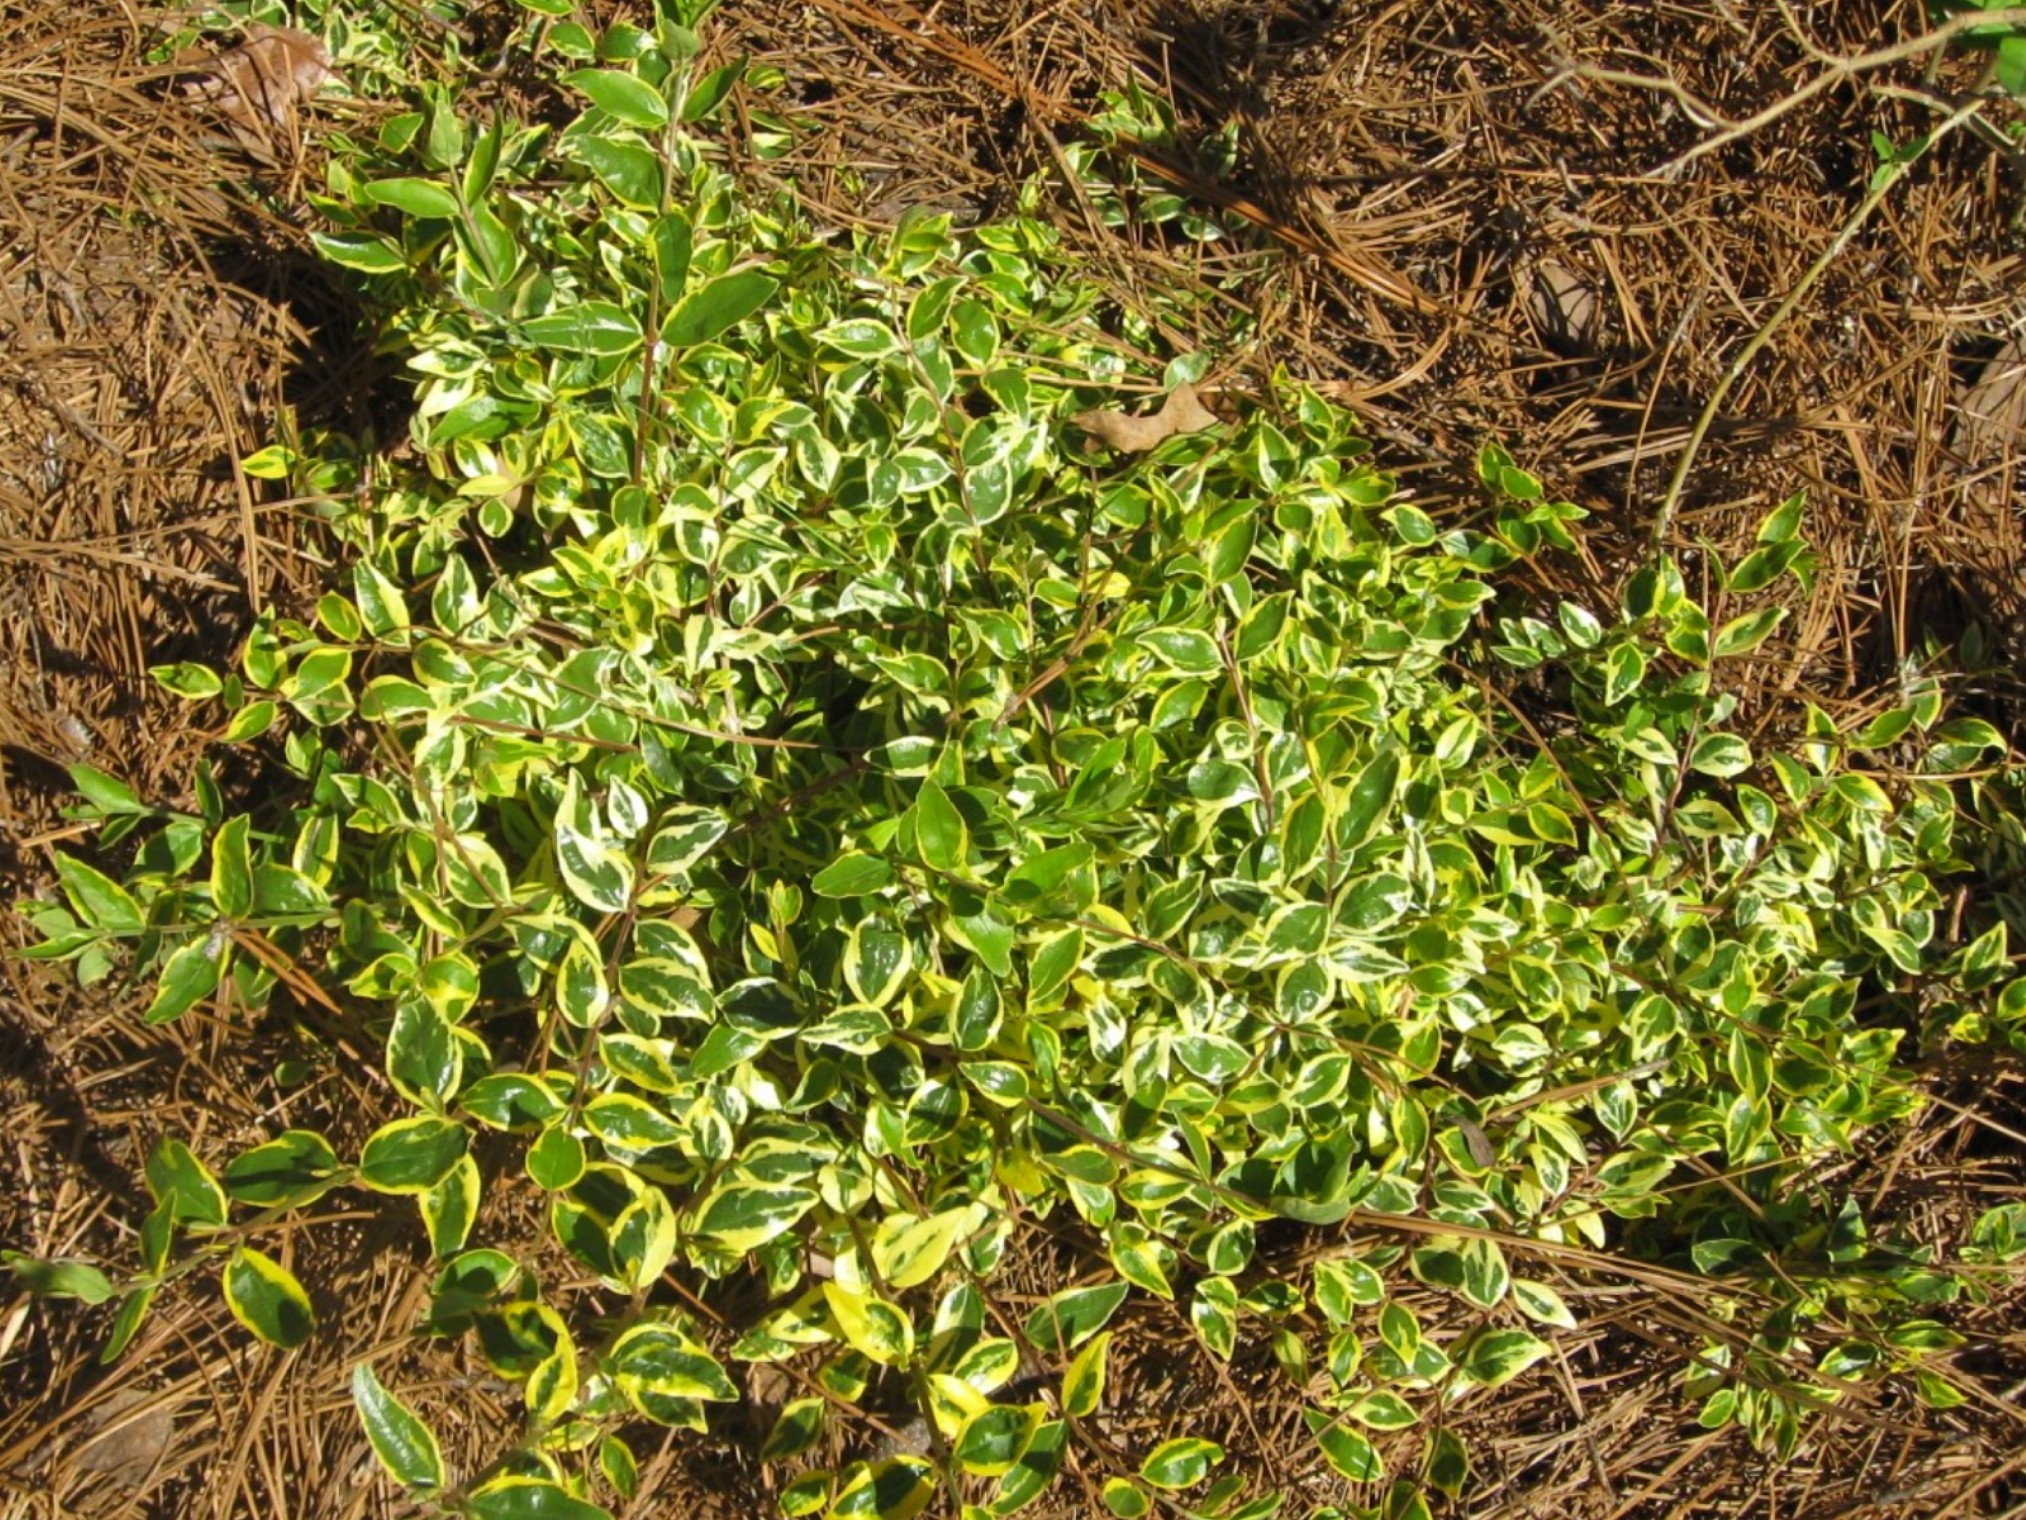 Abelia x grandiflora 'Hopleys' / Abelia x grandiflora 'Hopleys'